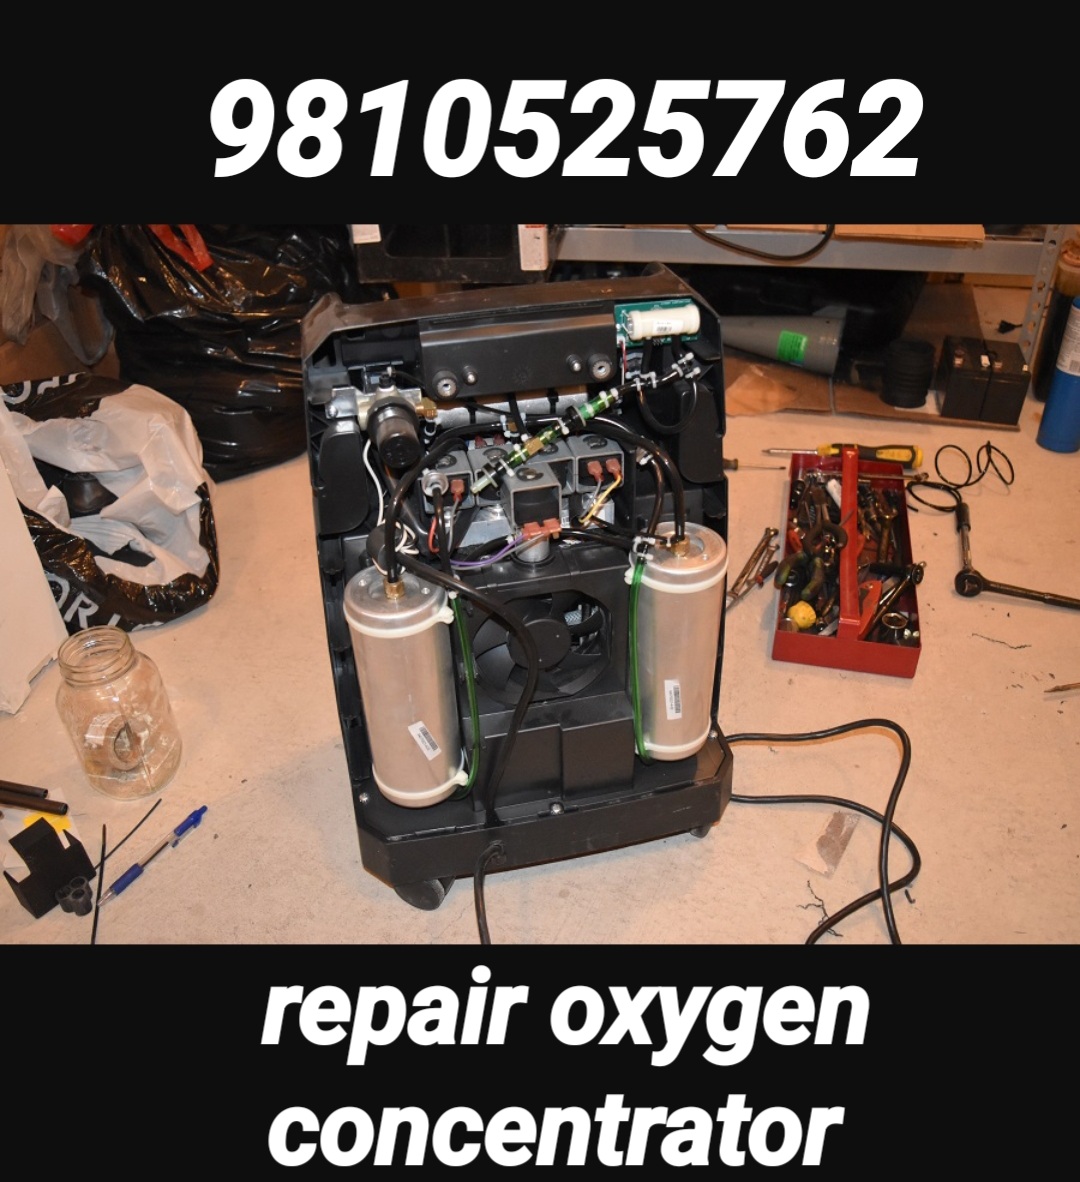 OXYGEN MACHINE REPAIR IN GURUGRAM 9810525762